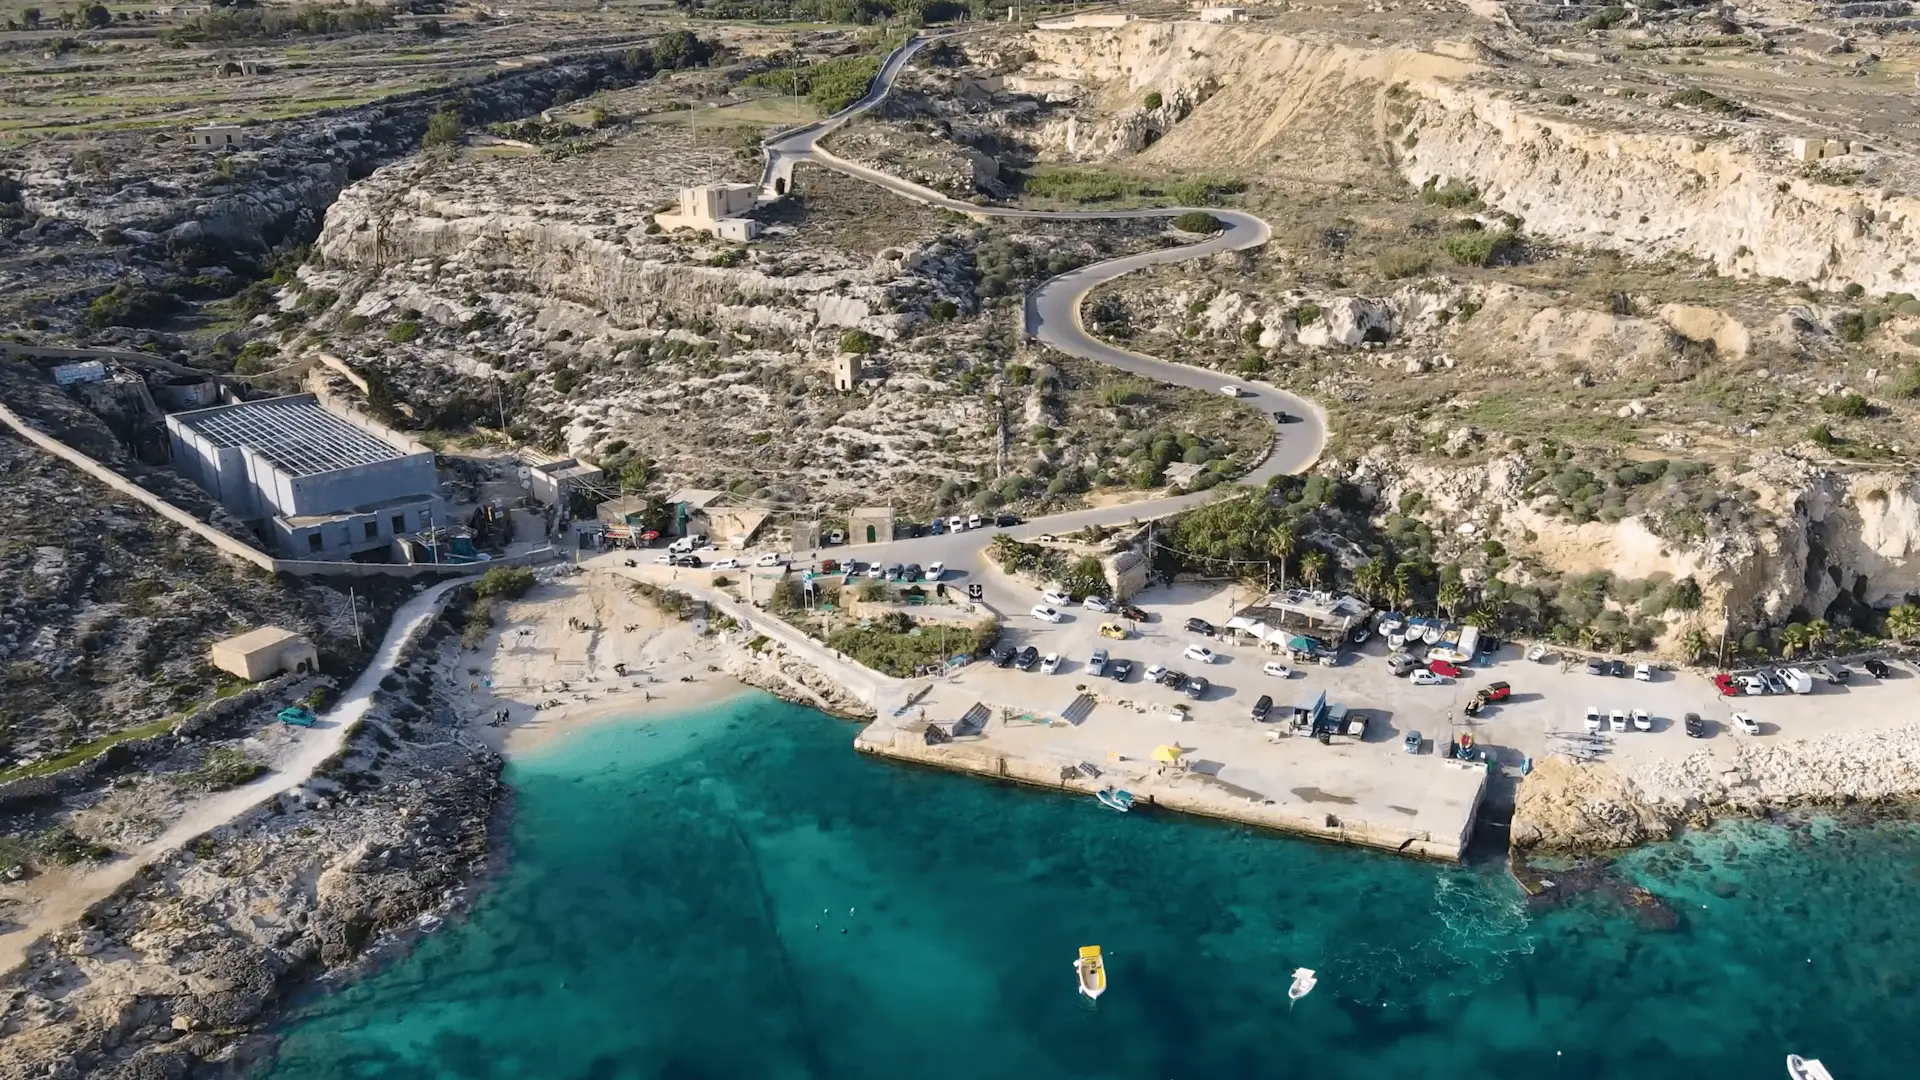 Spiaggia di Malta vista dal mare: Hondoq Ir Rummien